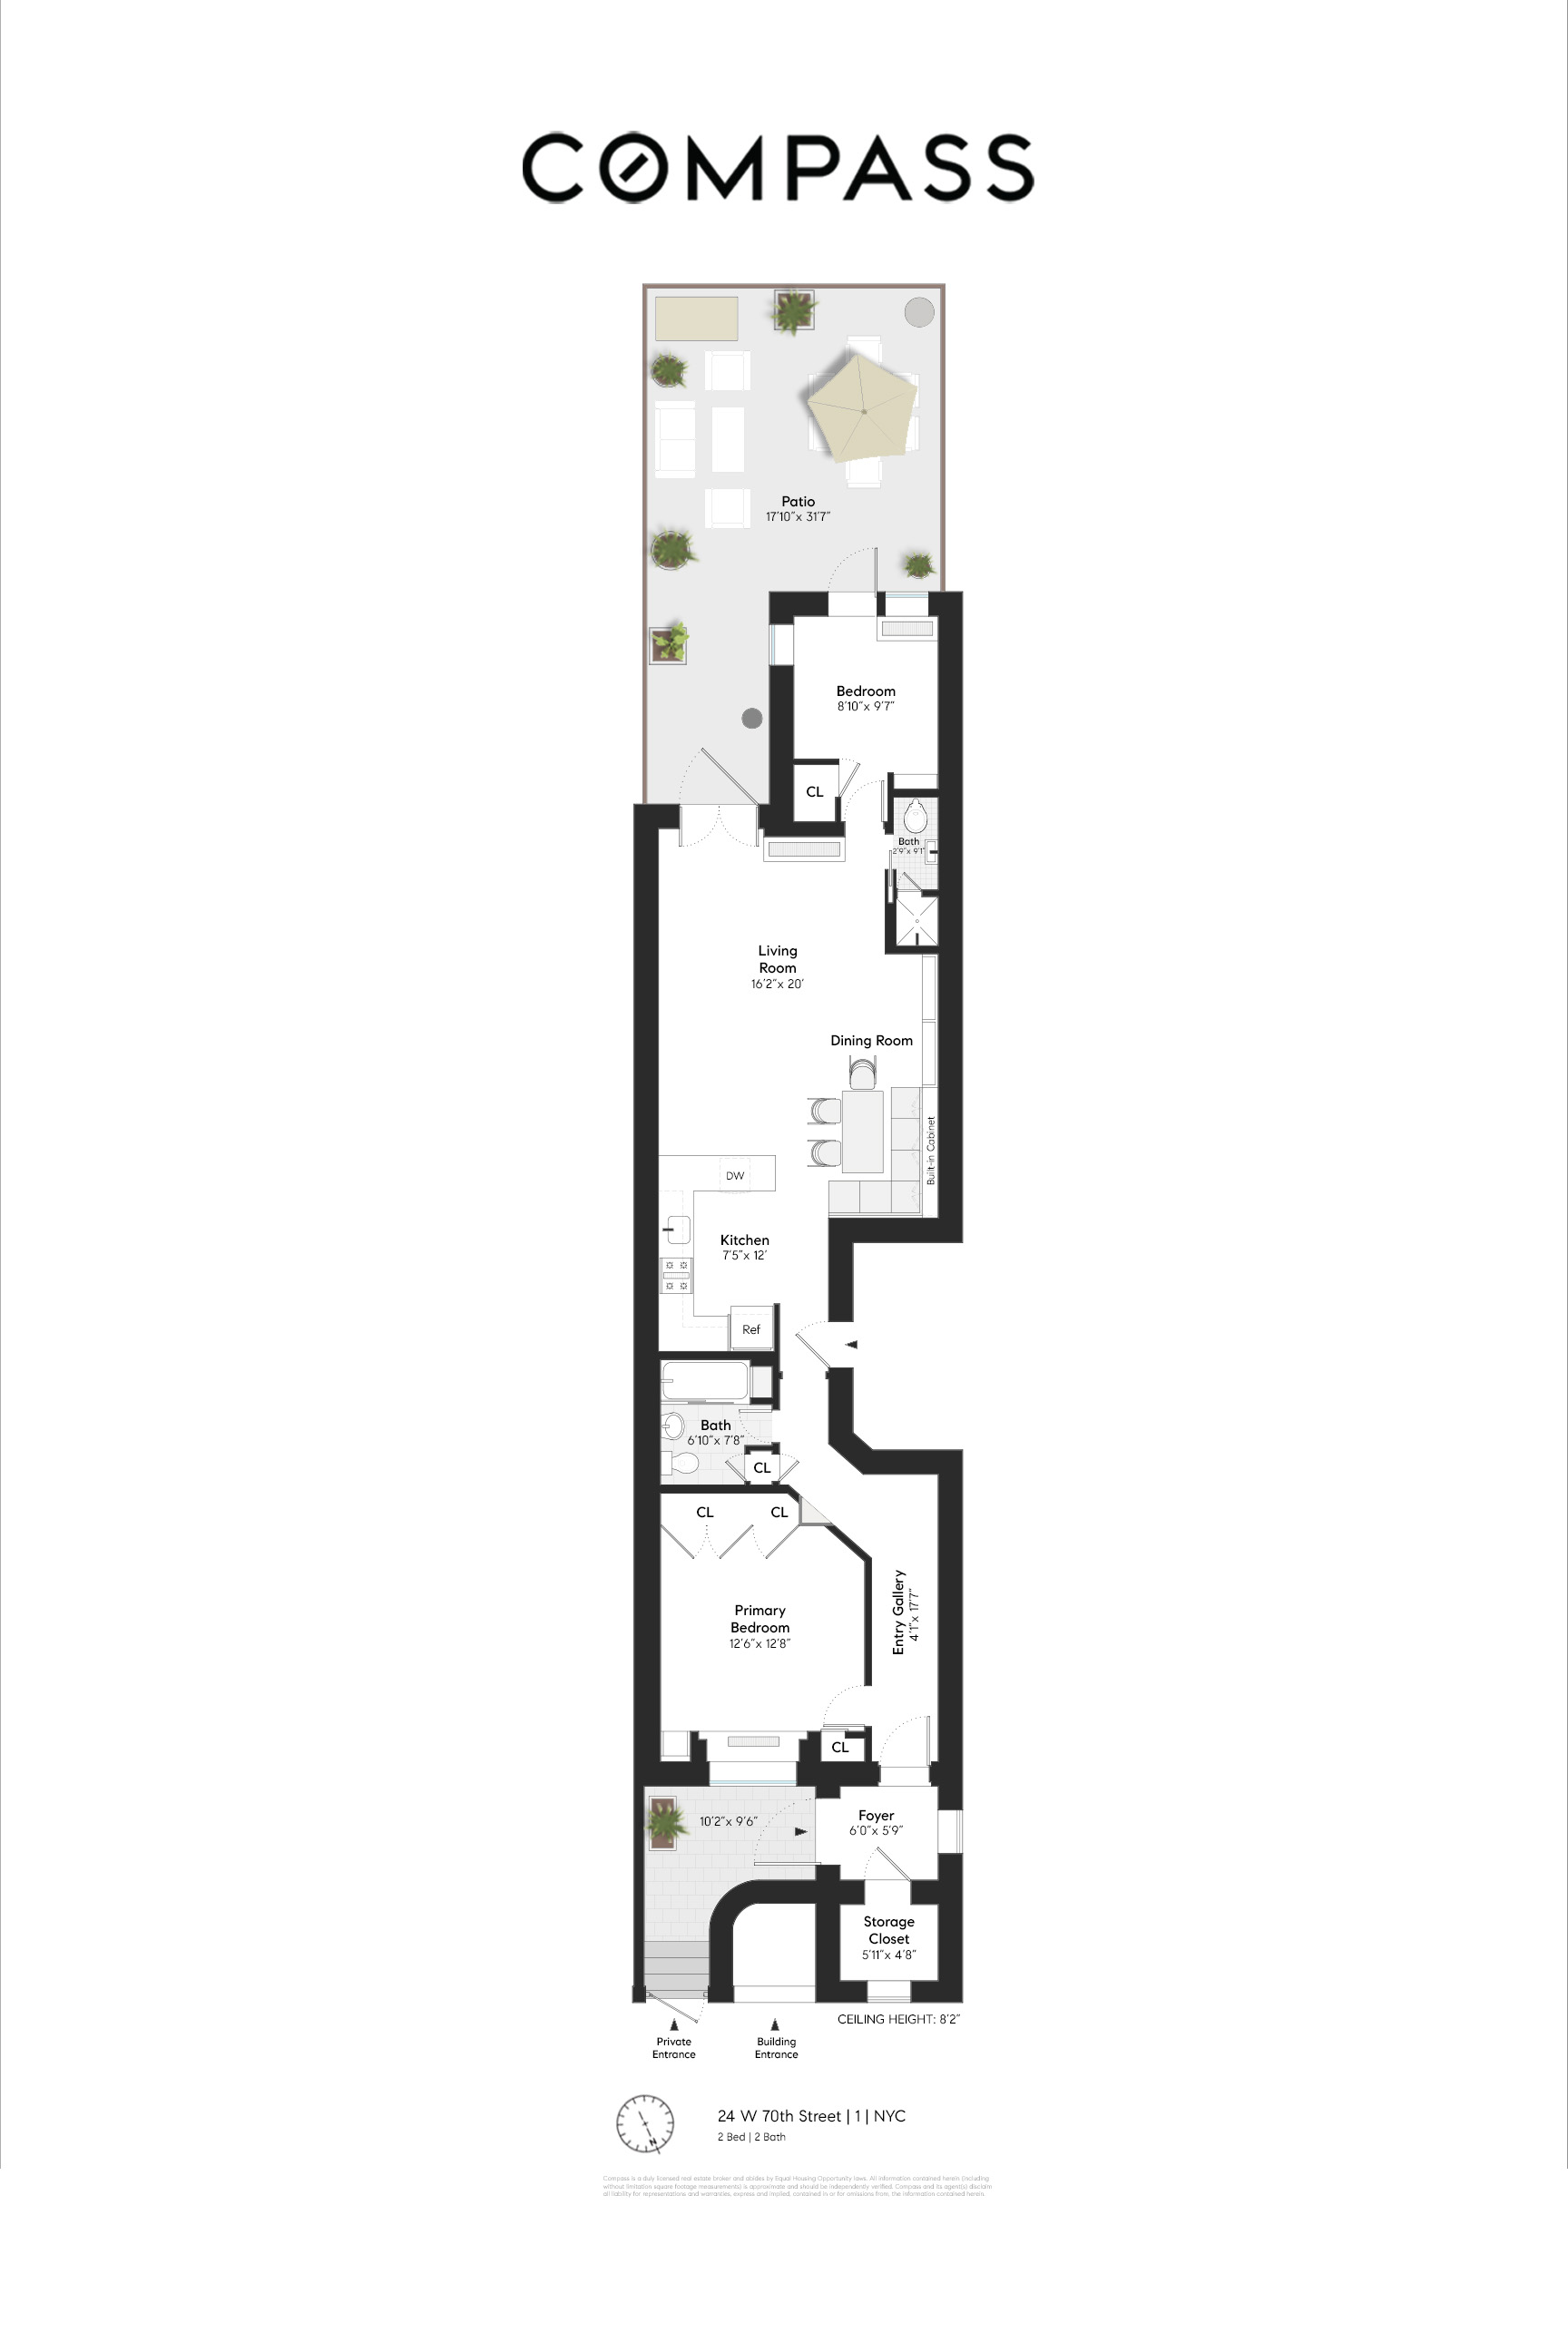 Floorplan for 24 West 70th Street, 1